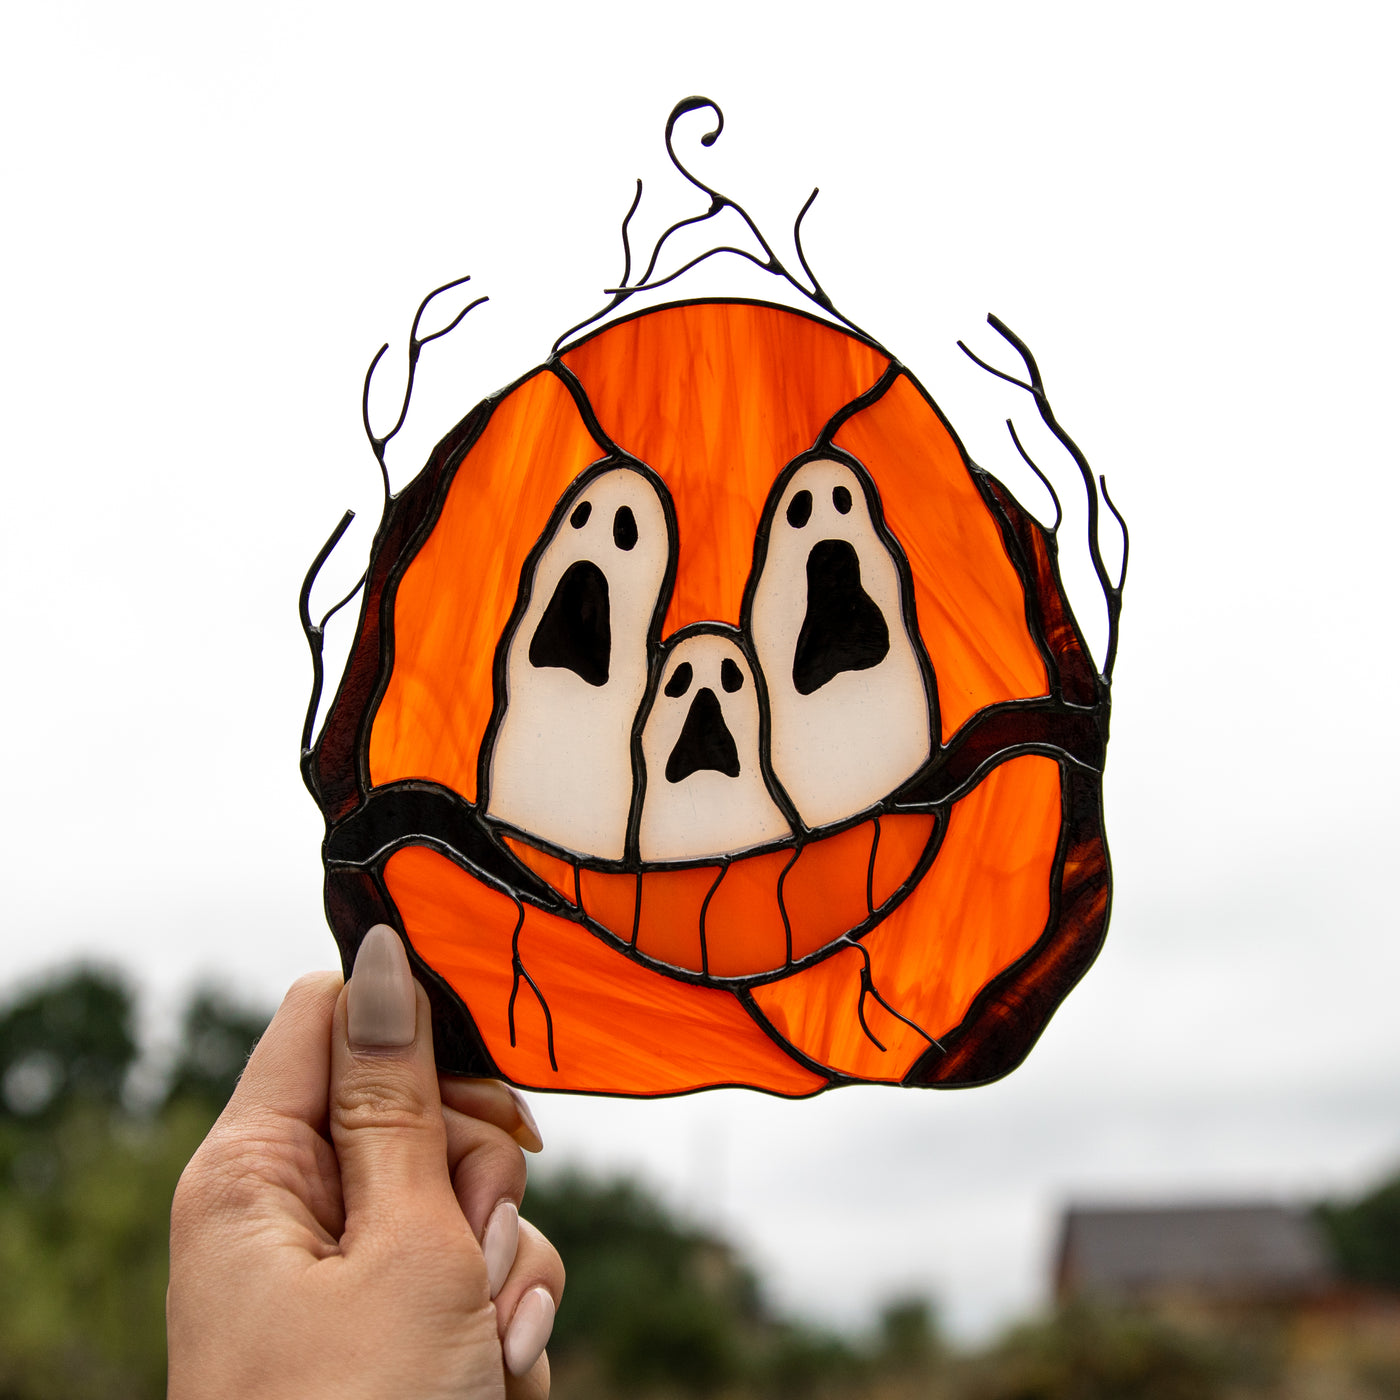 Stained glass suncatcher of spooky ghost-eyes pumpkin